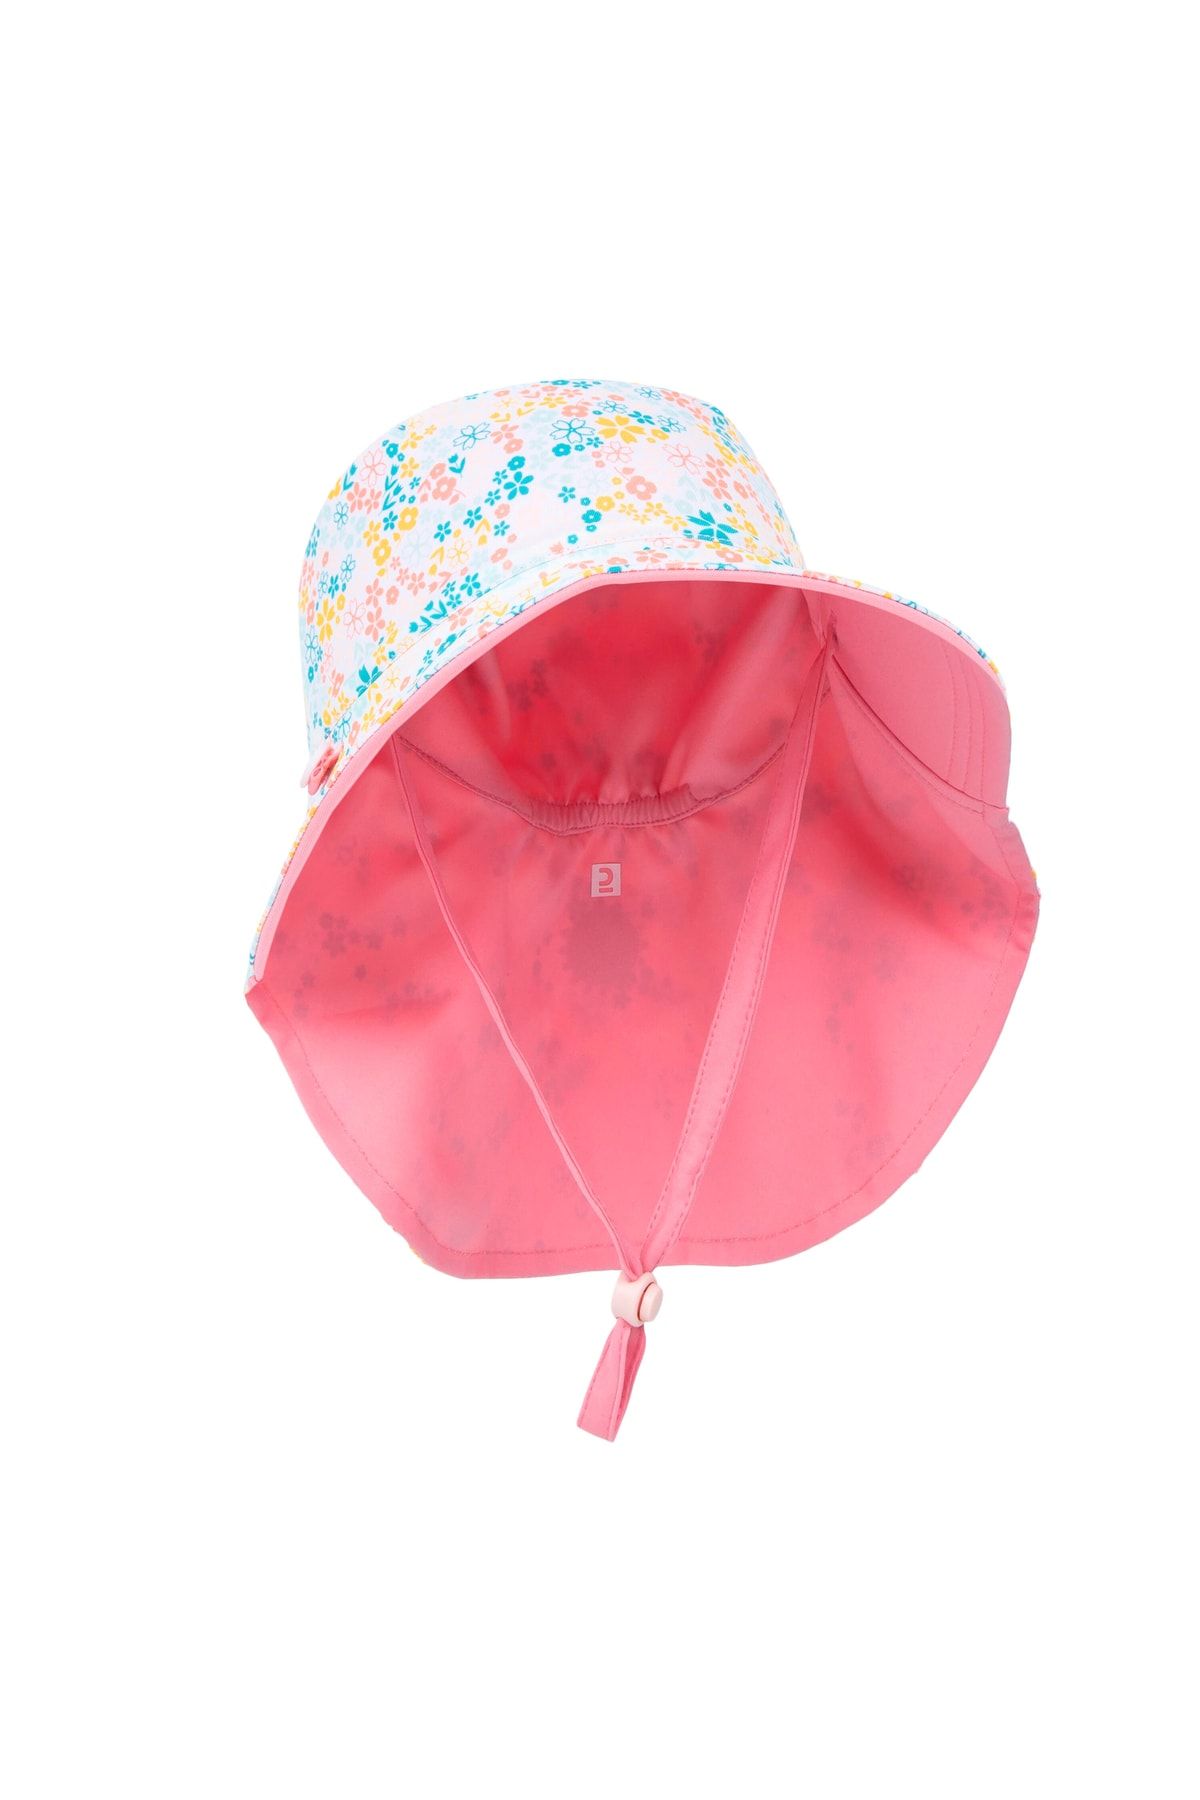 Decathlon کلاه محافظ UV کودک Nabaiji - چاپ صورتی / گلدار